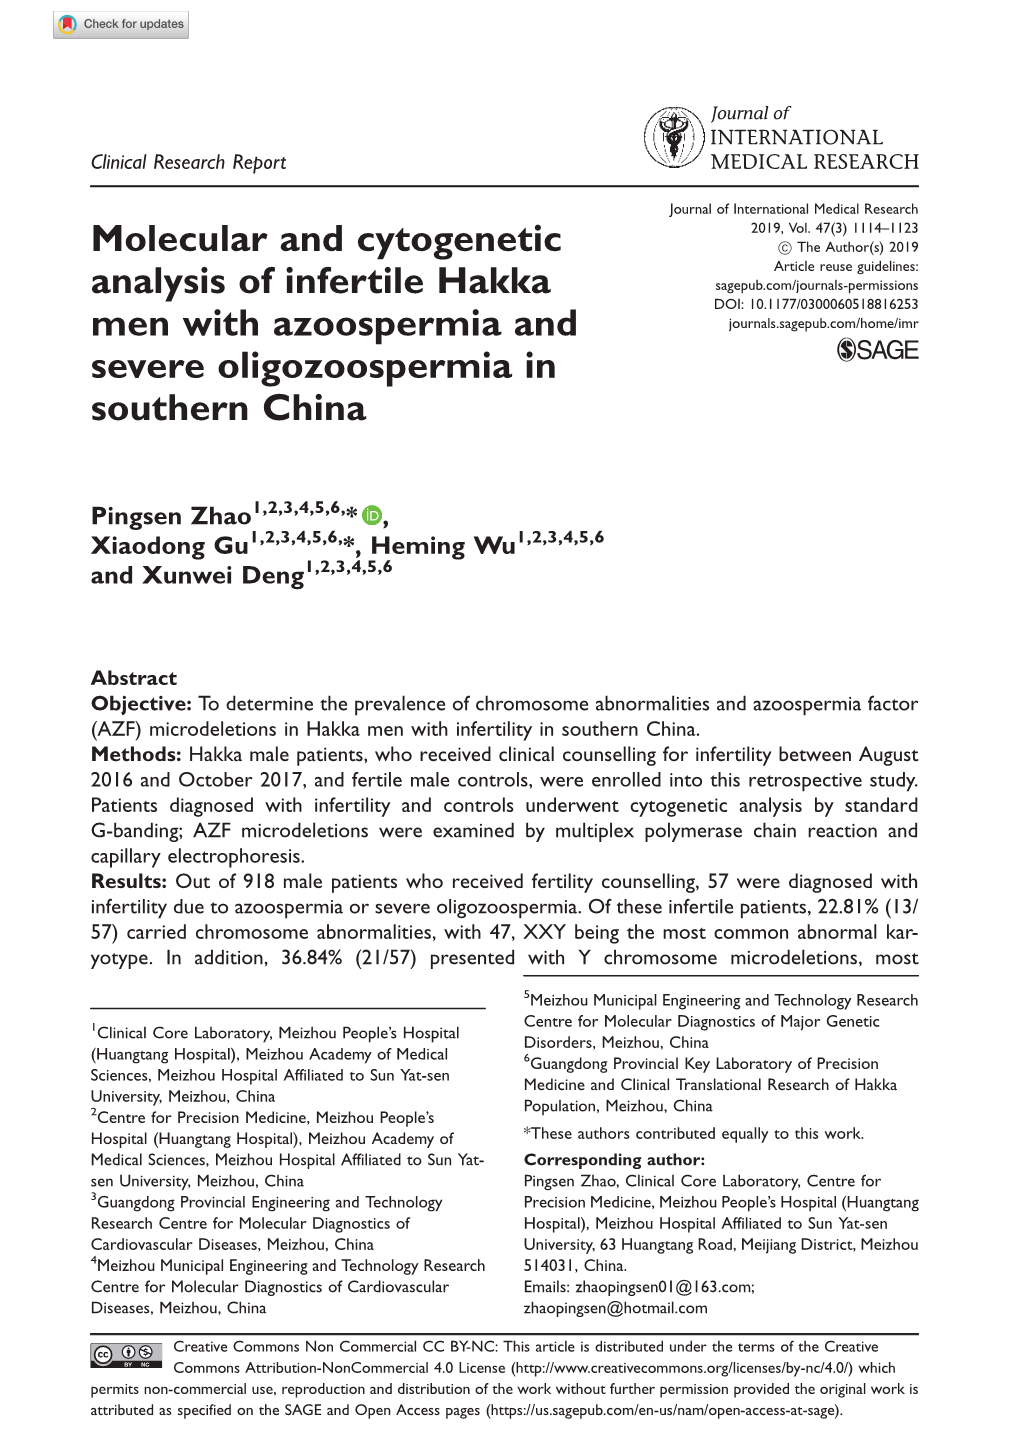 Molecular and Cytogenetic Analysis of Infertile Hakka Men With